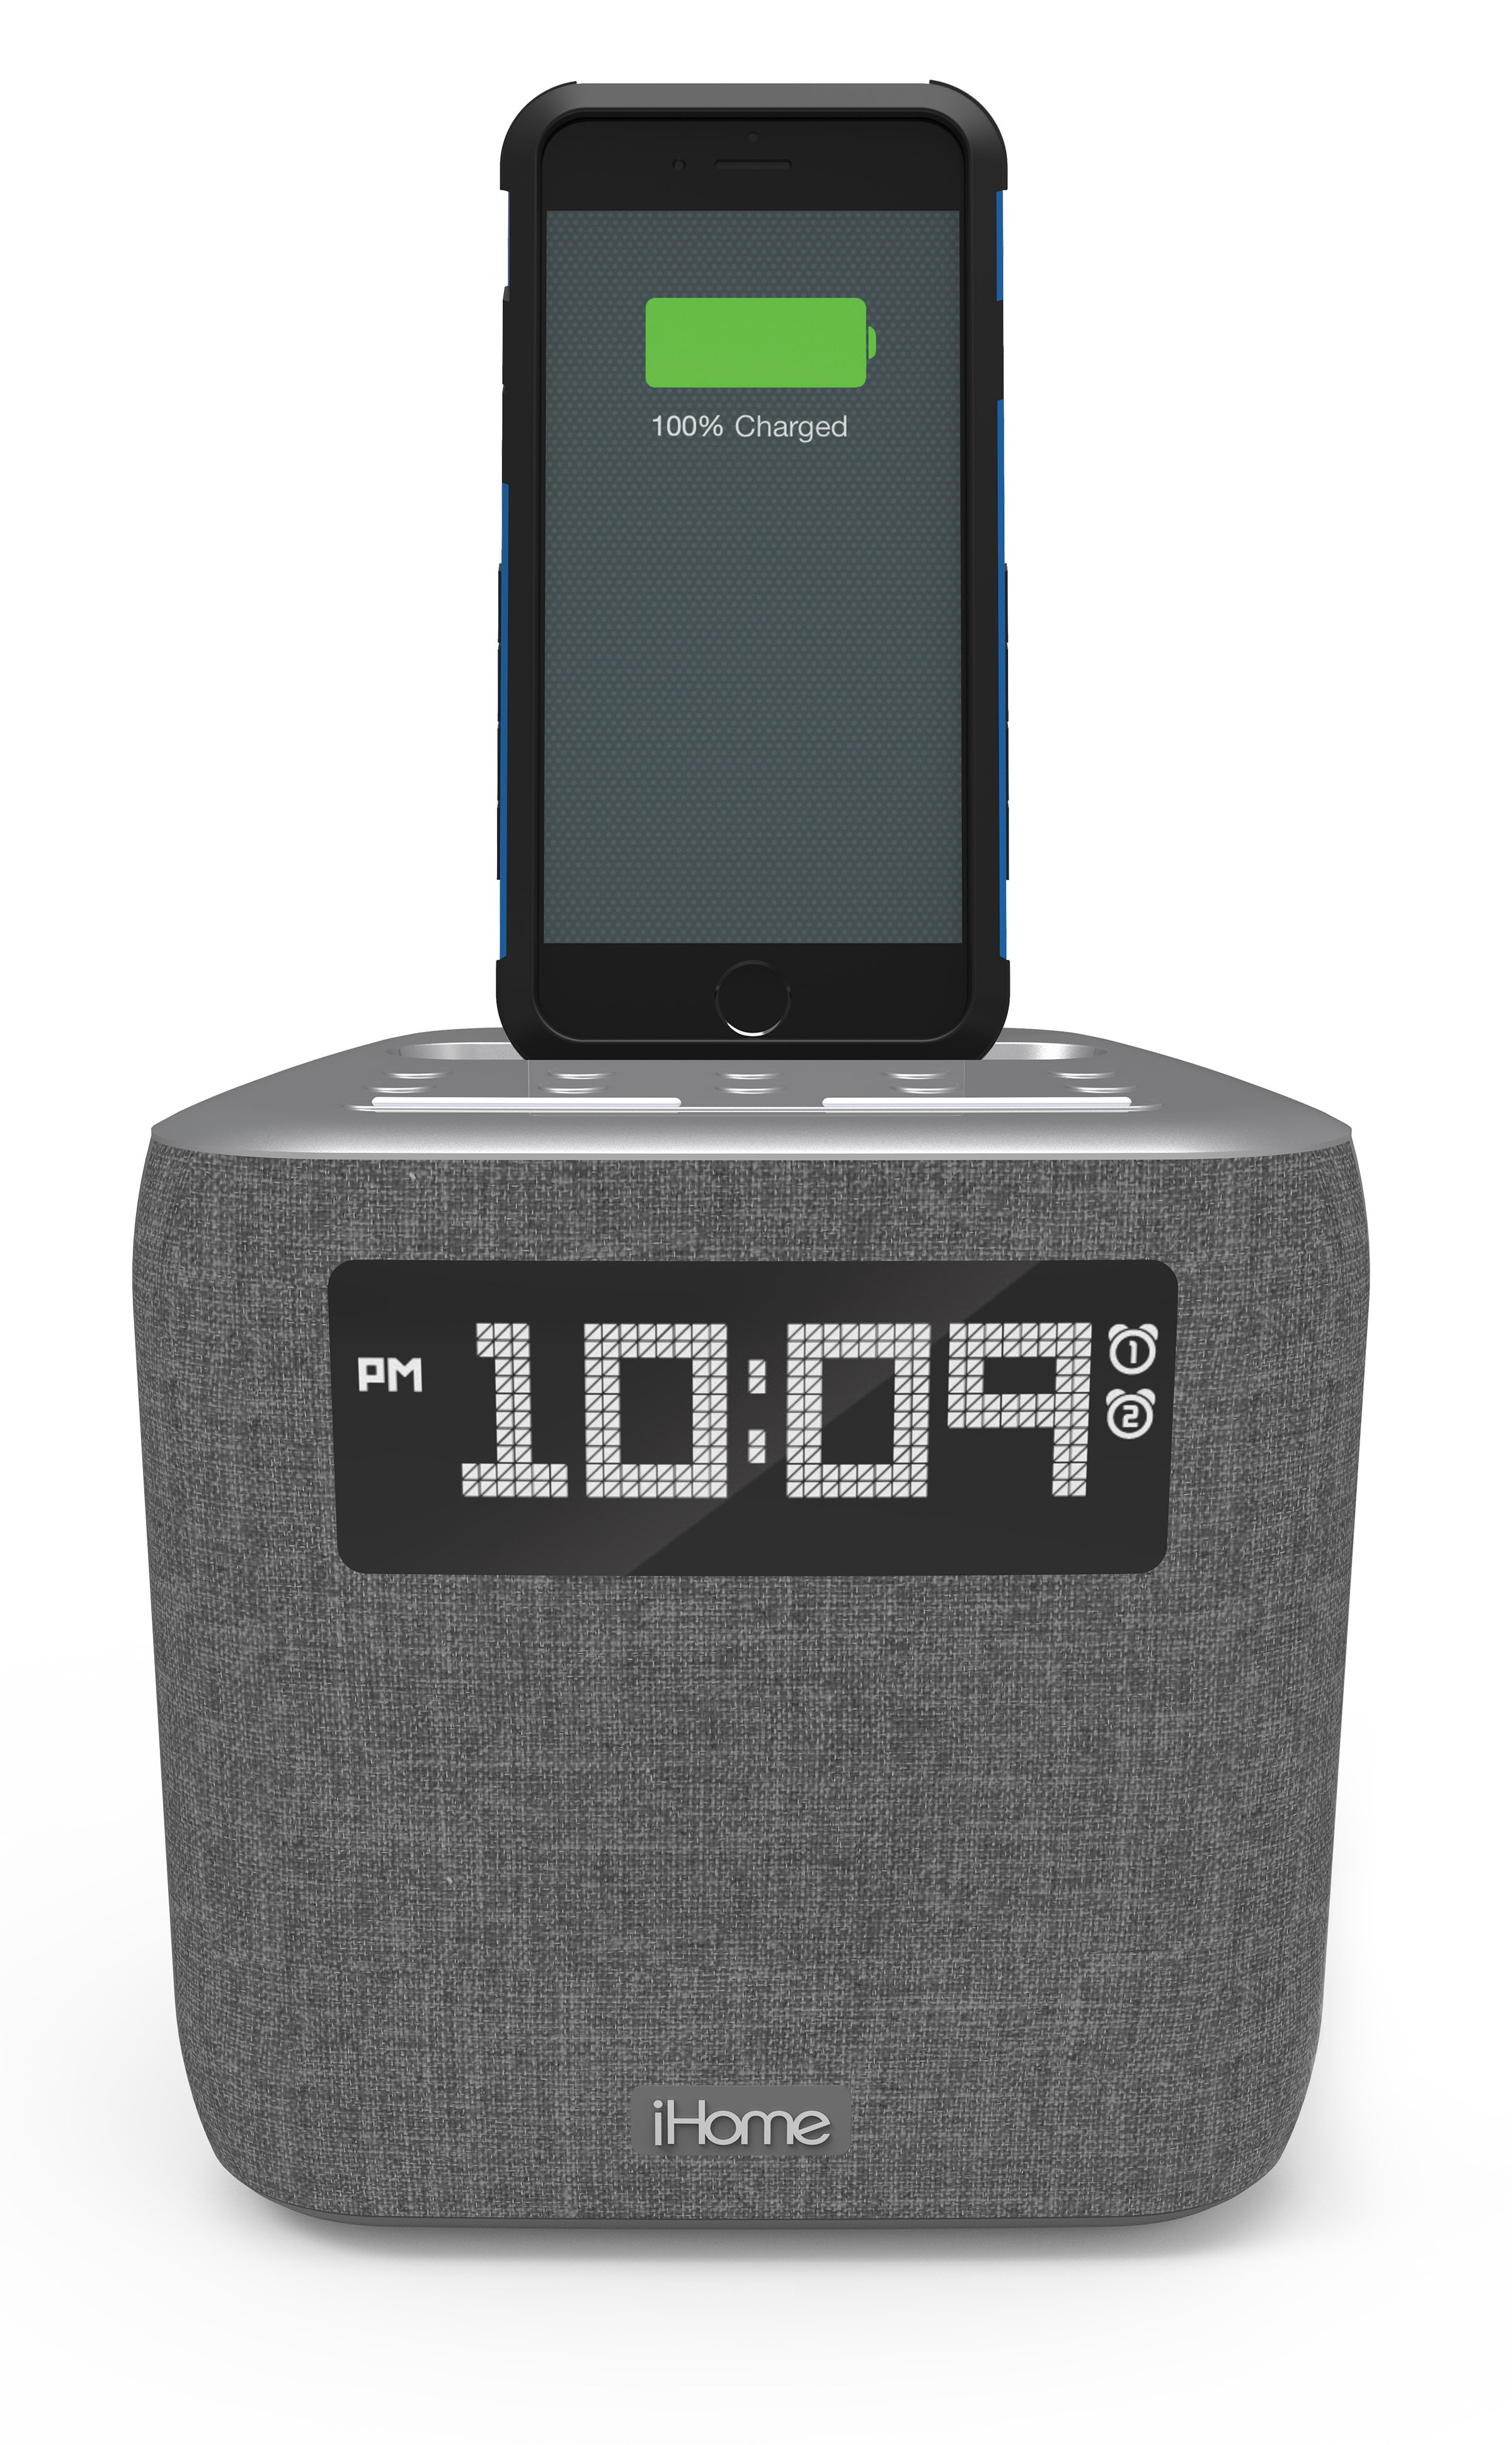 Ihome Ipl8 Speaker System With Lightning Dock And Alarm Walmart